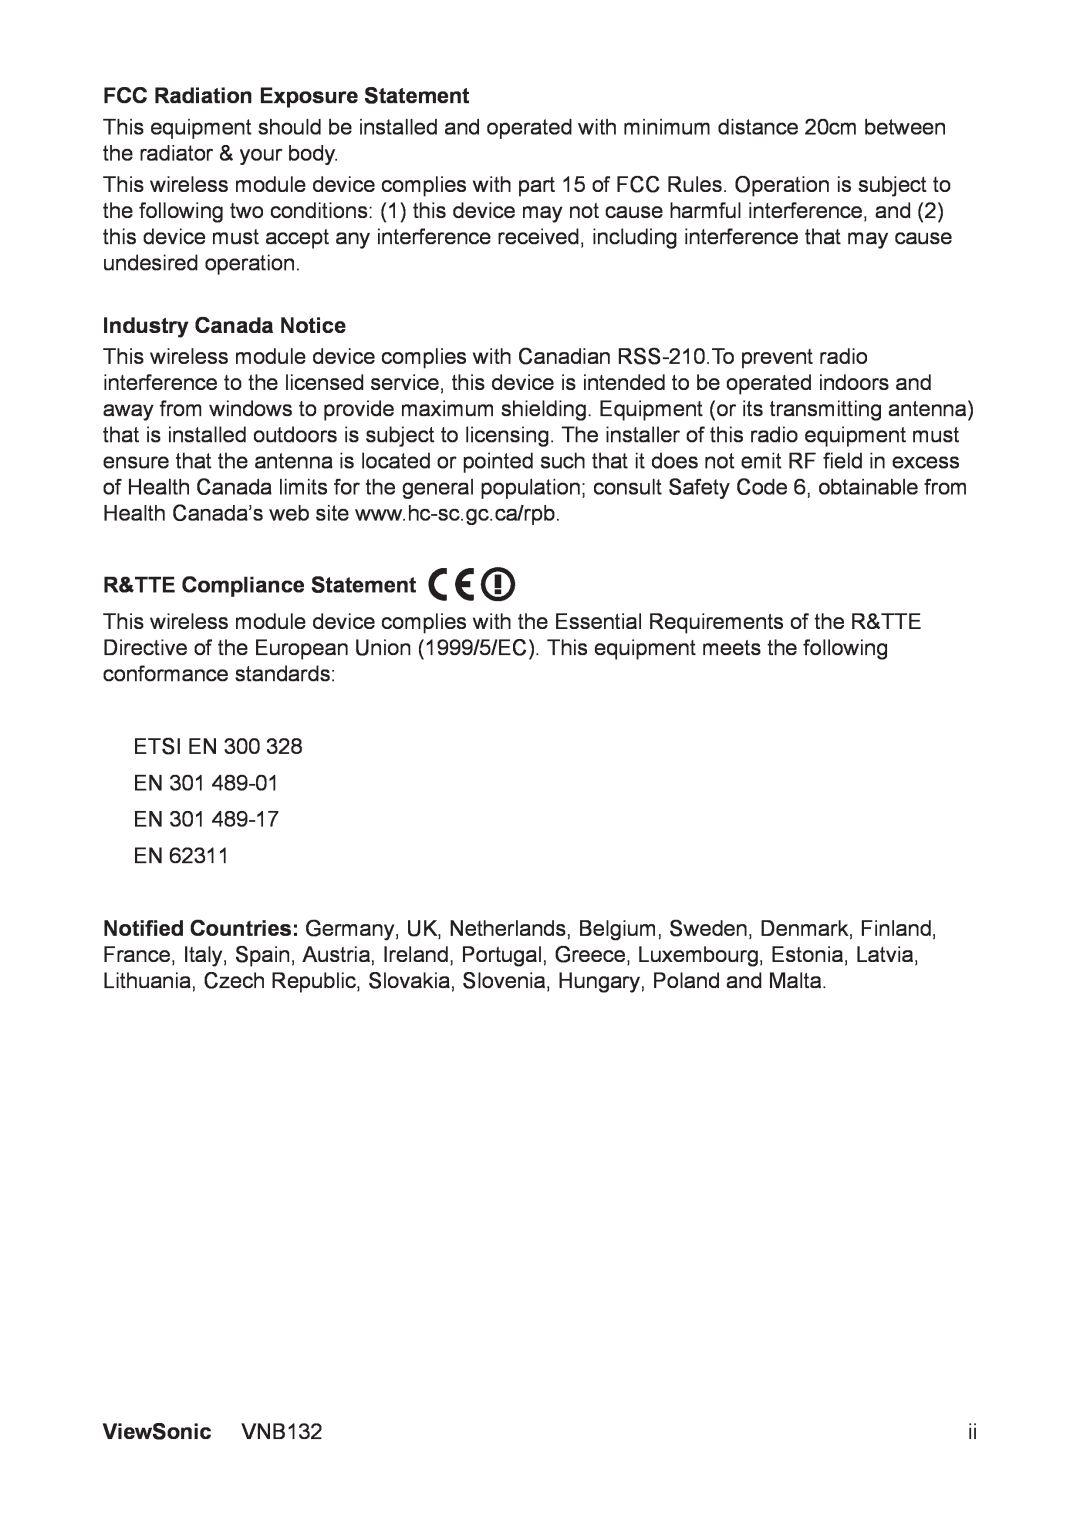 ViewSonic VS13191 FCC Radiation Exposure Statement, Industry Canada Notice, R&TTE Compliance Statement, ViewSonic VNB132 